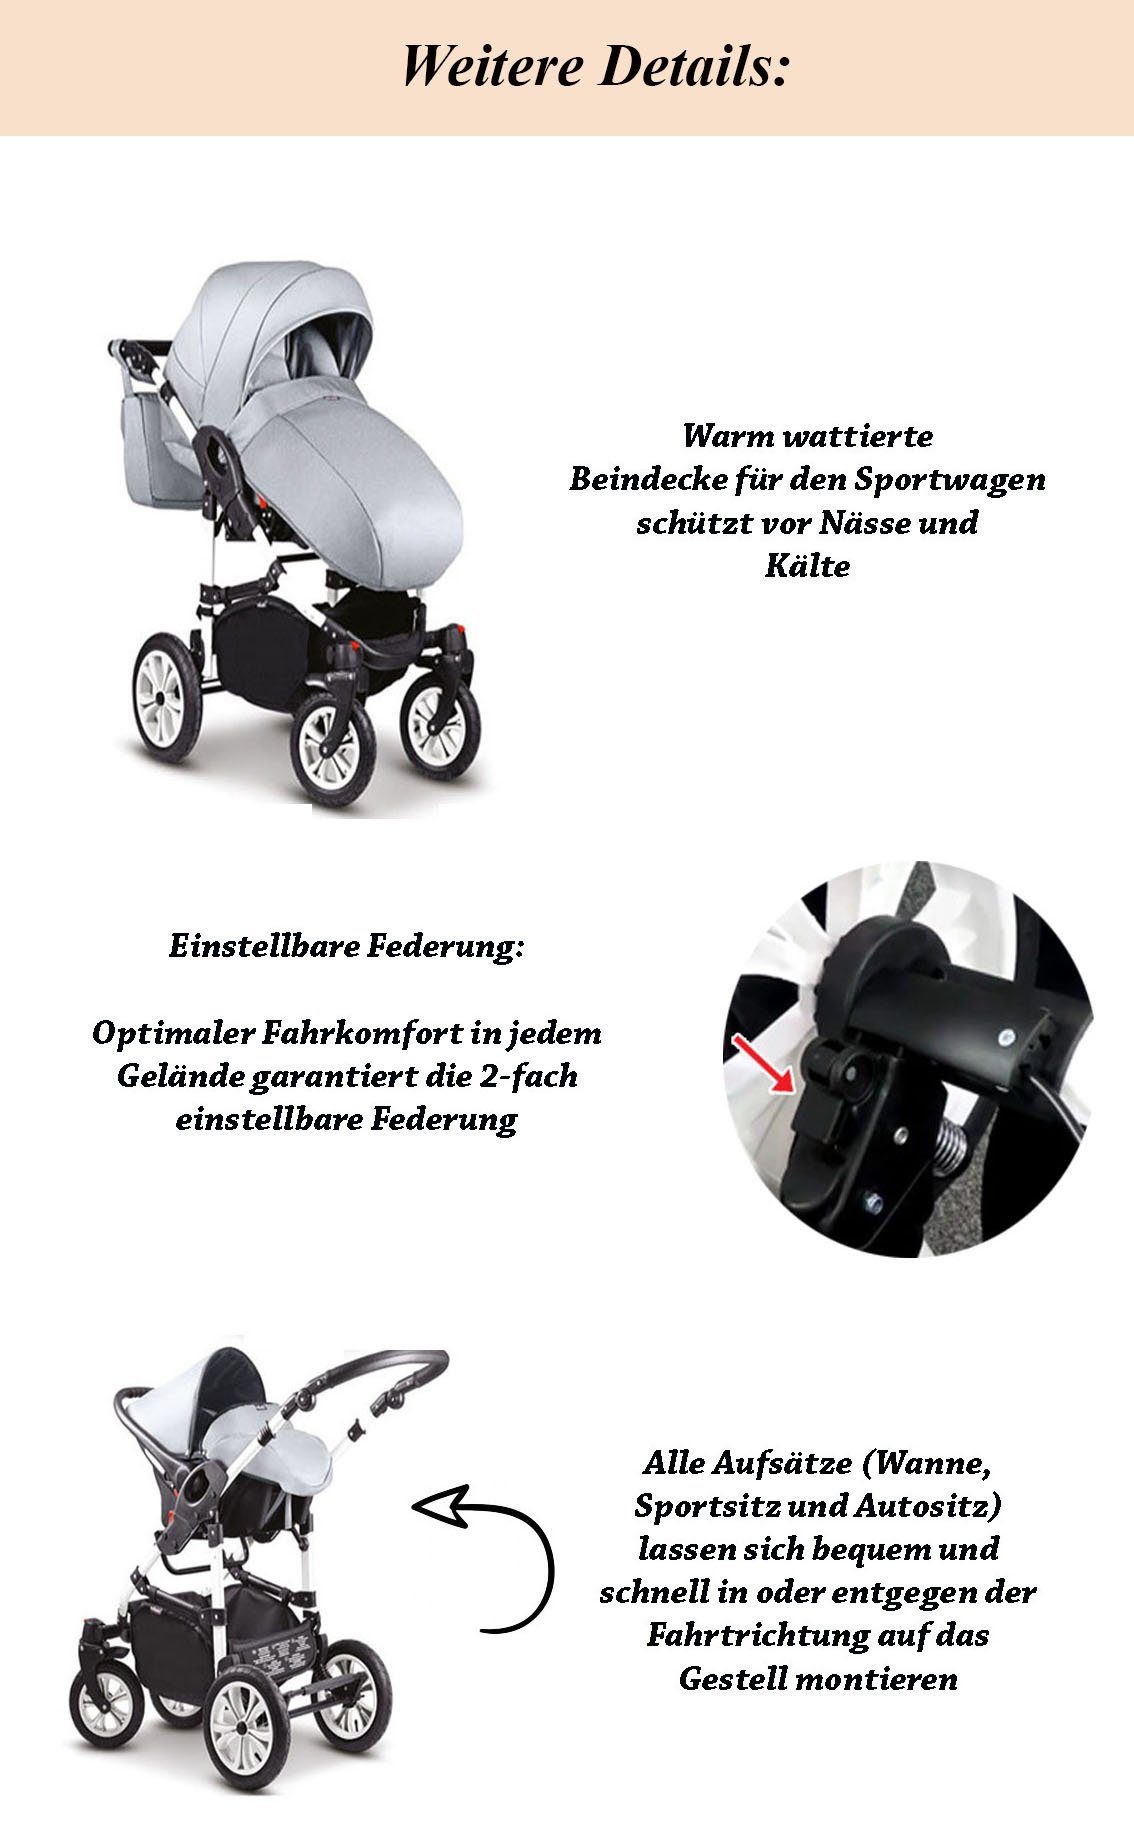 babies-on-wheels Kombi-Kinderwagen 3 in Kinderwagen-Set - Cosmo Teile Farben - in 16 1 41 Schwarz-Grau